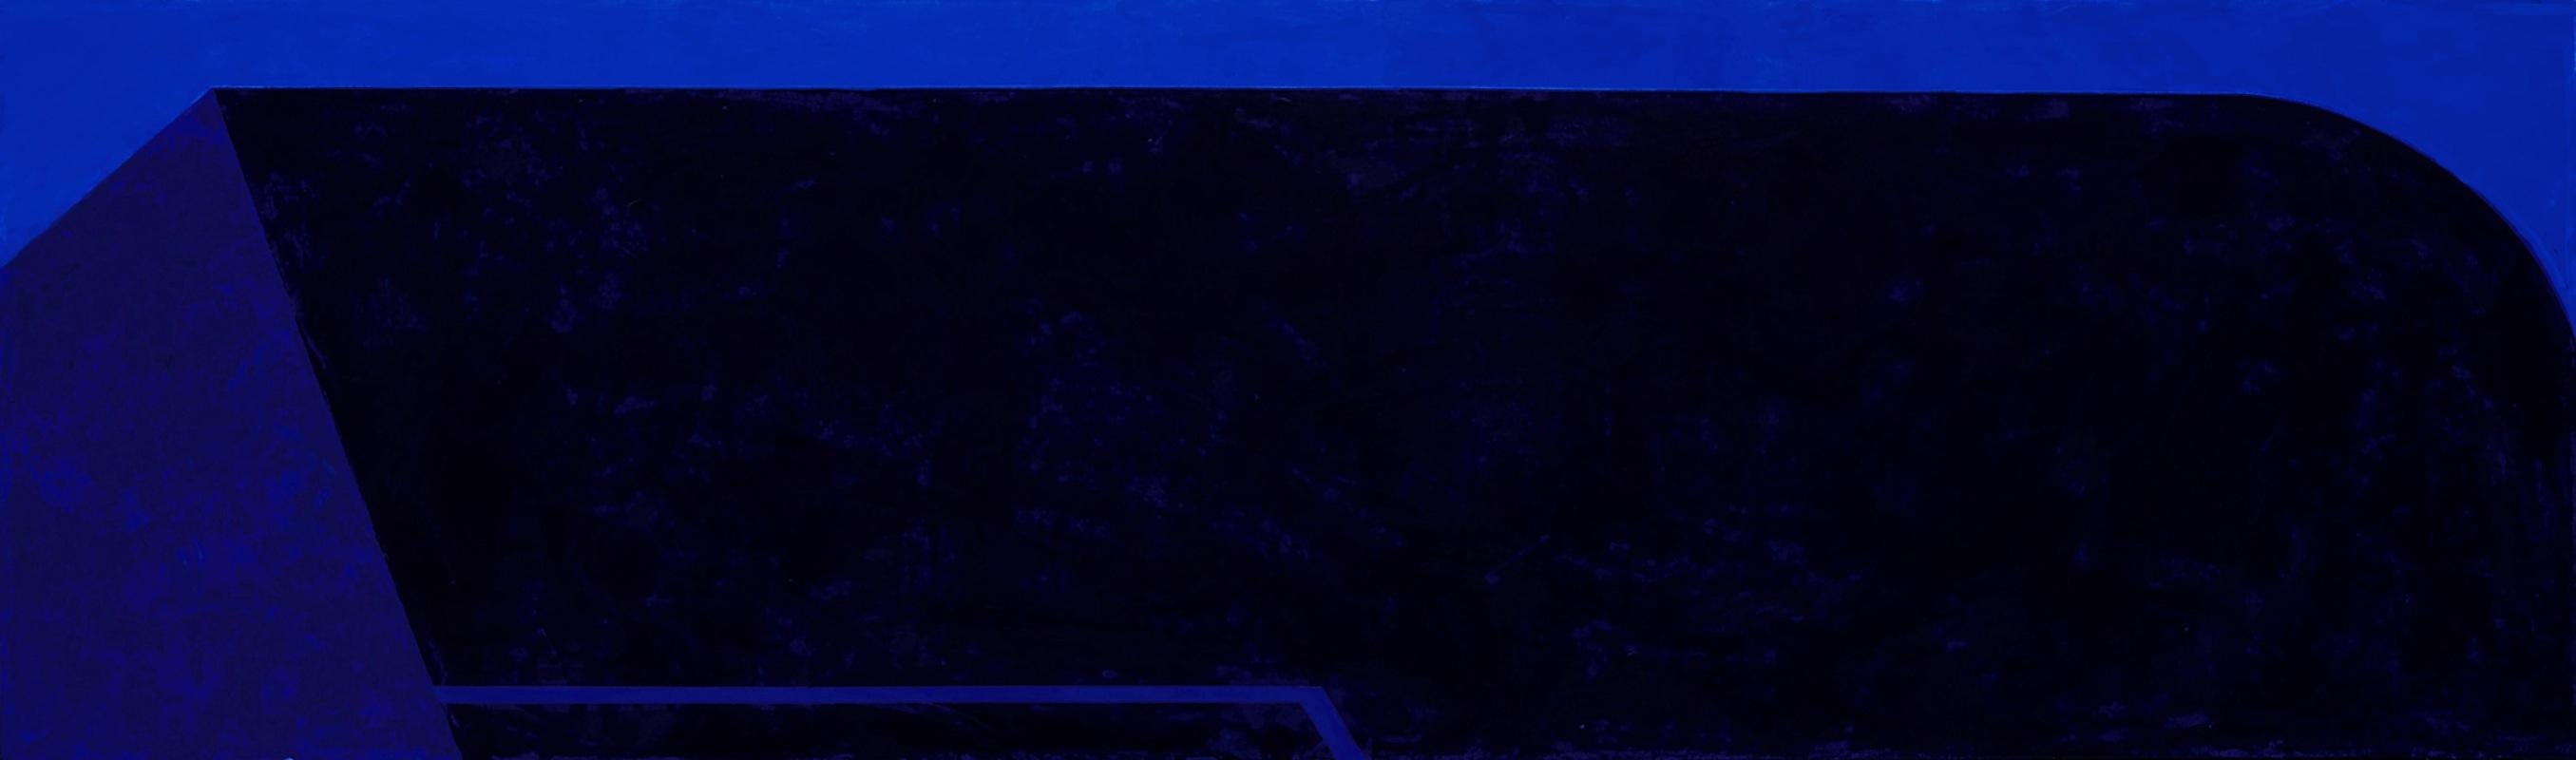 Macyn Bolt, Untitled (Contour), 2018, Minimalist, acrylic, 16 x 20 x 2 inches For Sale 6